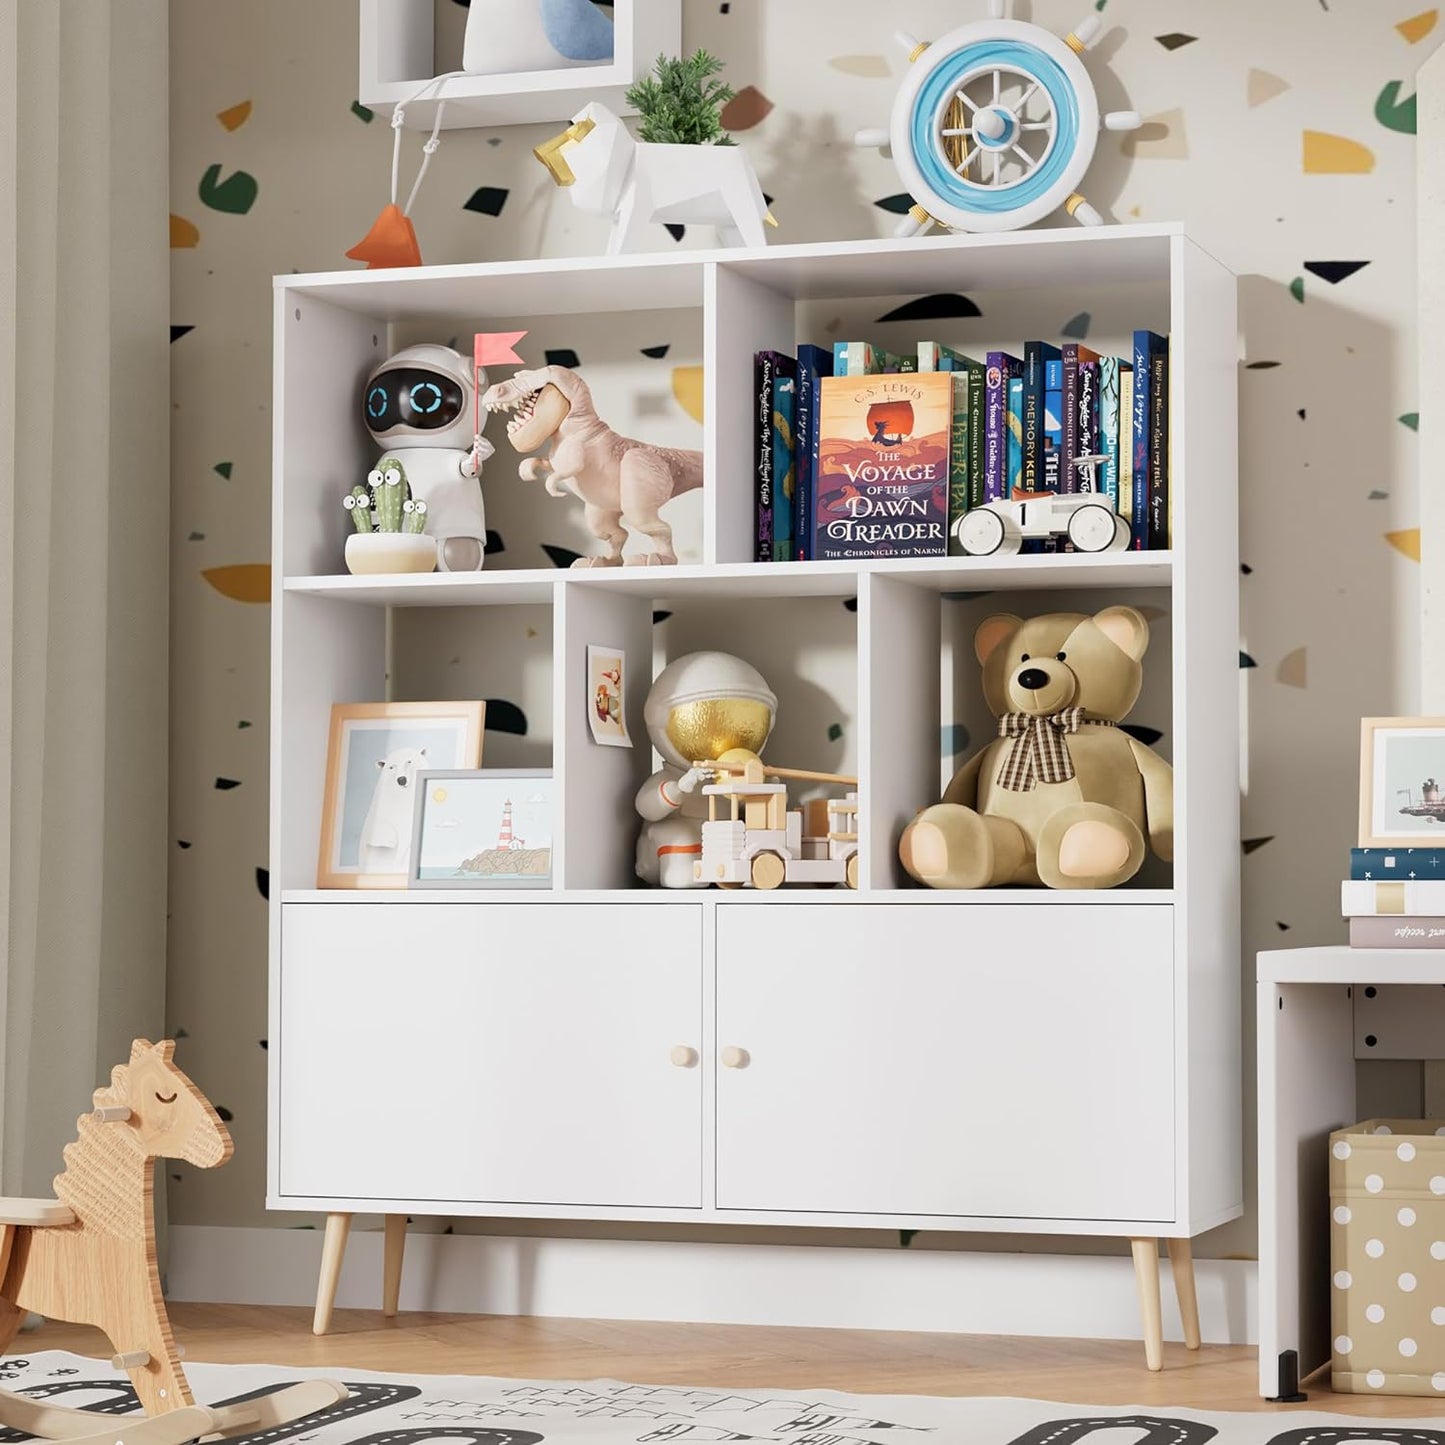 Cube Bookshelf, Mid-Century Modern Bookcase, 3 Tier Bookshelf with Doors, Storage Display Cabinet, Wood Bookshelf Organizer, Bookshelf for Bedroom, Living Room, Office